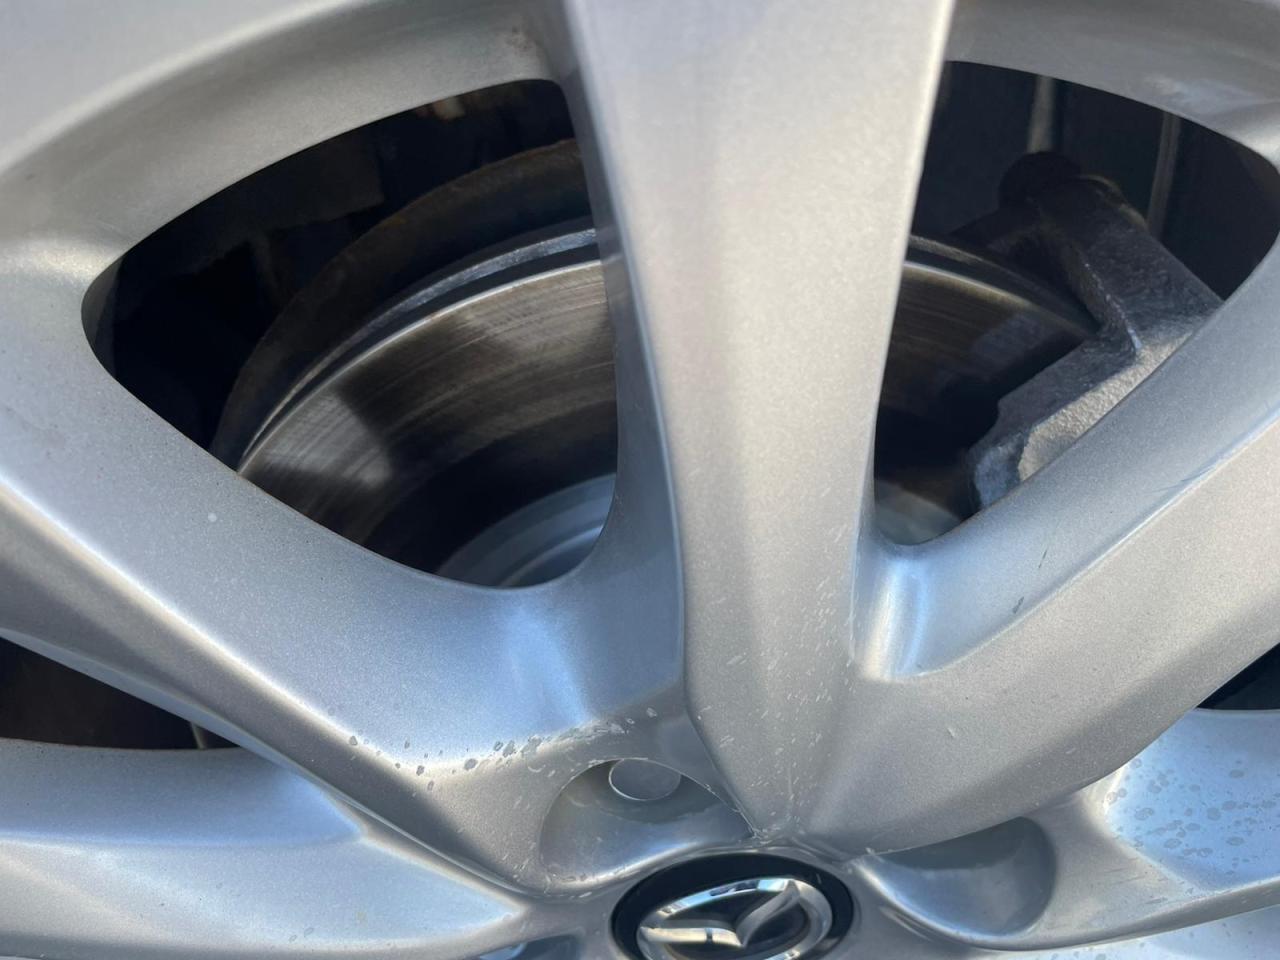 2015 Mazda MAZDA6 4dr 2.5L Auto GX SAFETY CERTIFED NEW TIRES/ BRAKES - Photo #7